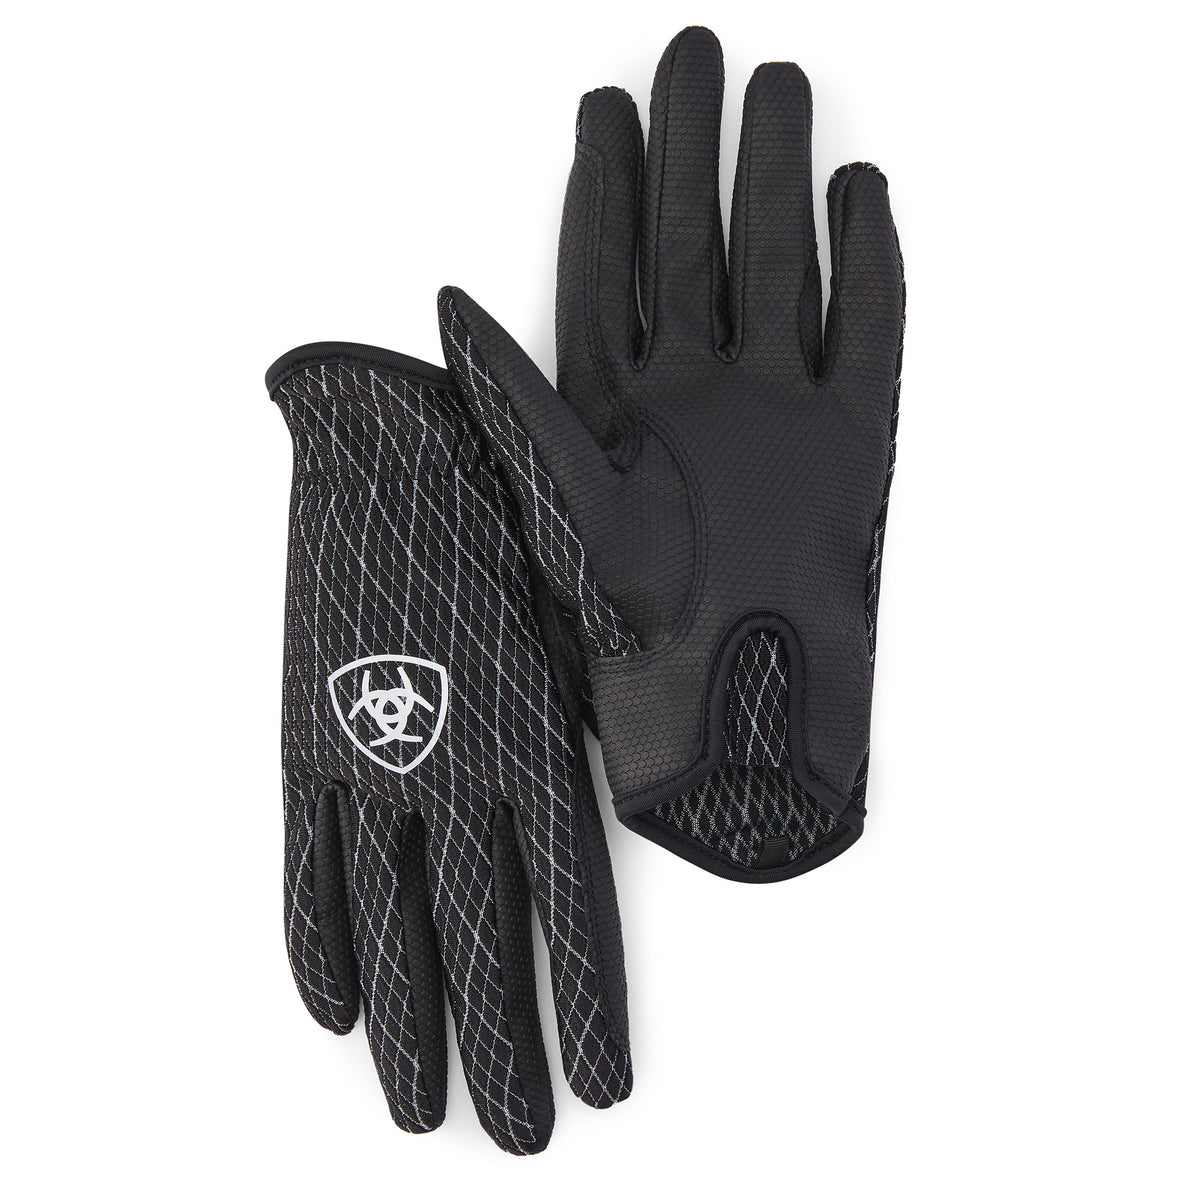 Ariat Uni Cool Girp Gloves - Black/White